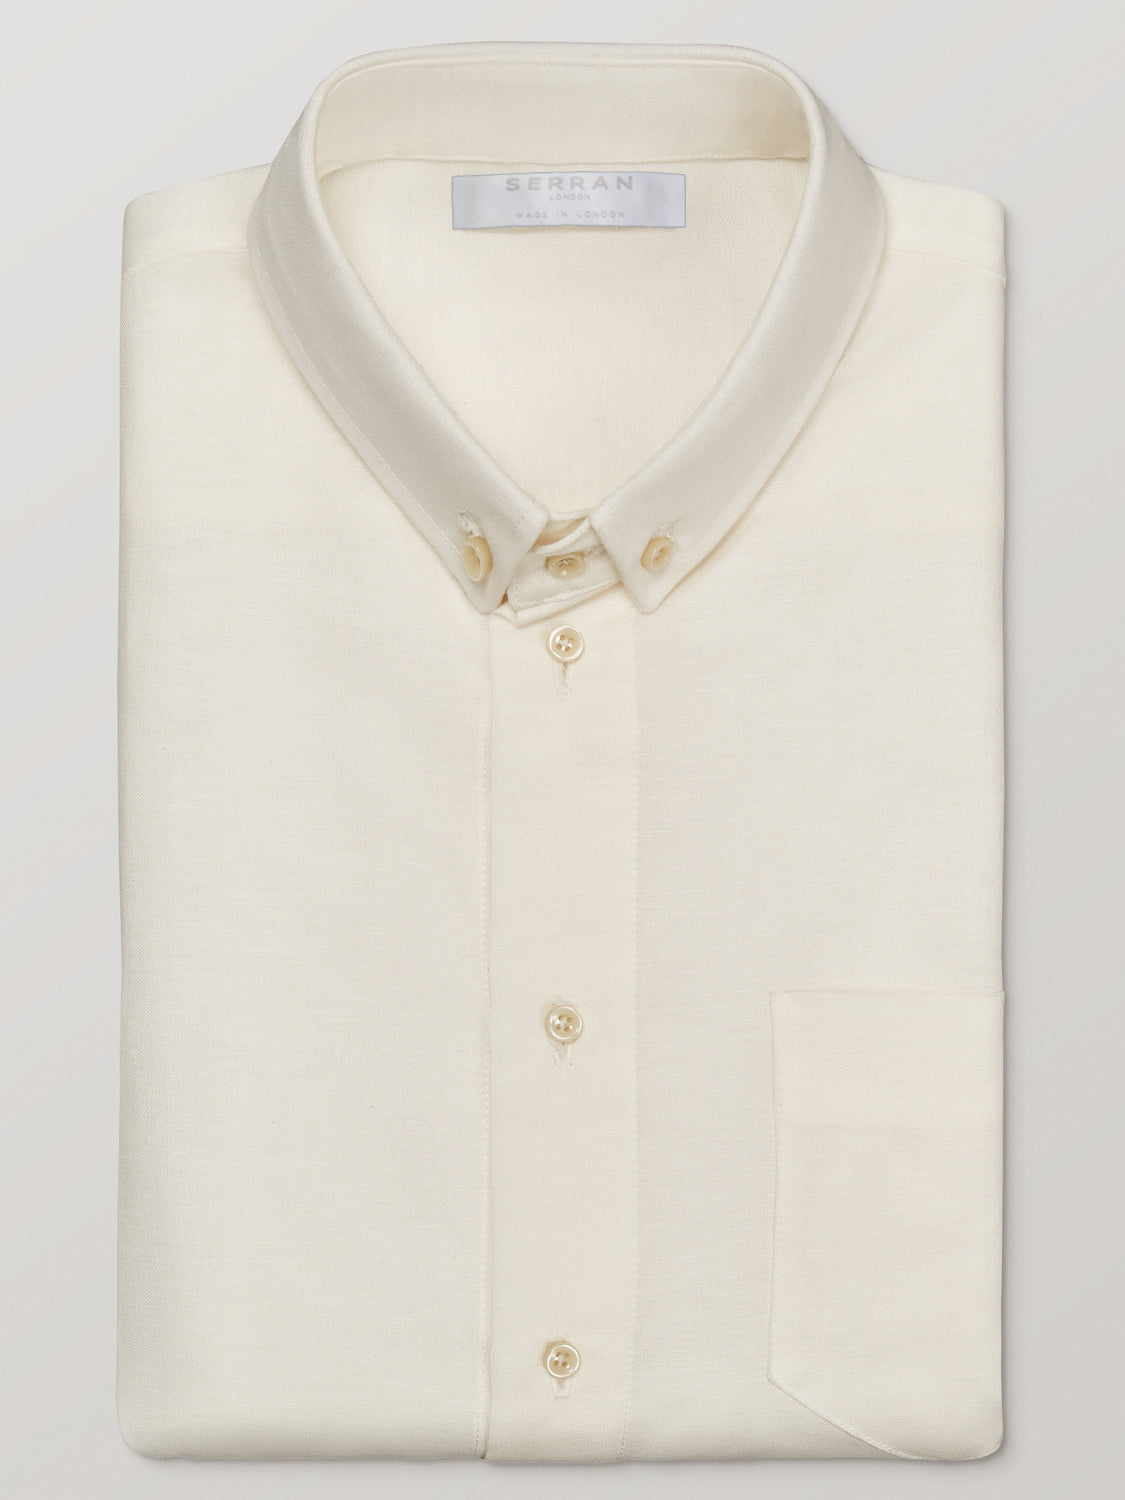 Cream Slim Fit Linen Shirt